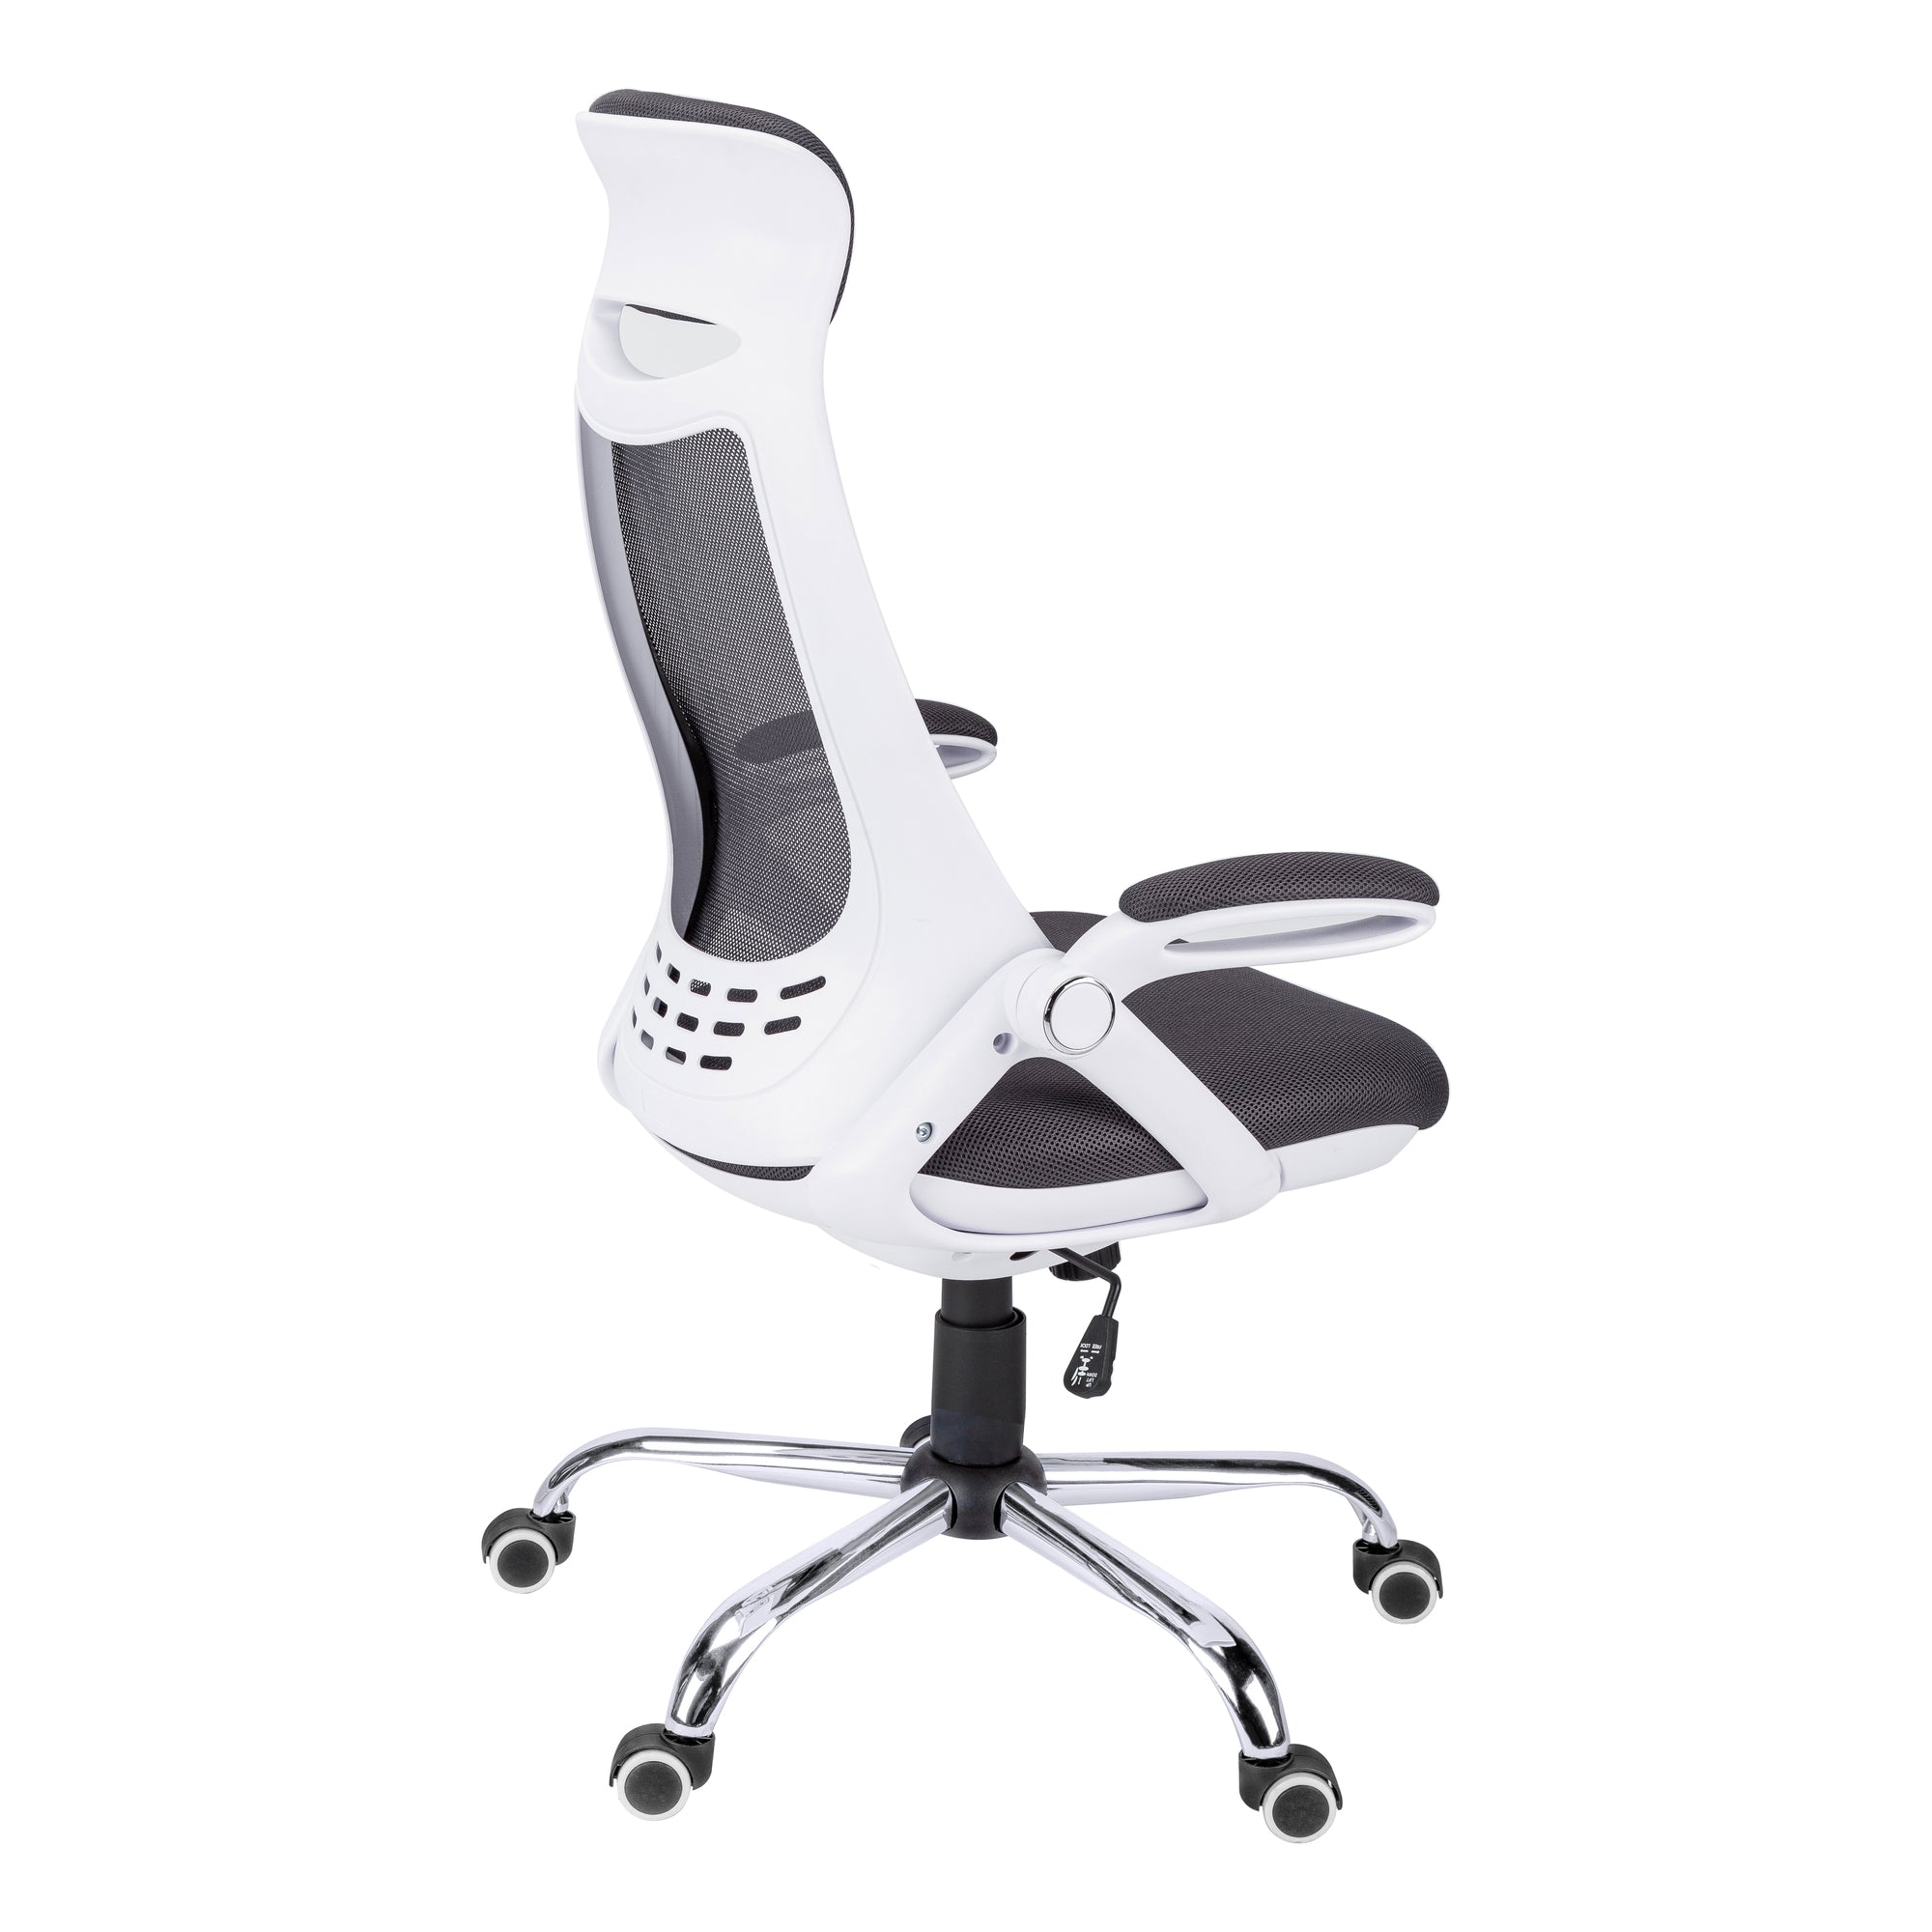 MN-817269    Office Chair, Adjustable Height, Swivel, Ergonomic, Armrests, Computer Desk, Office, Metal Base, Mesh, White, Grey, Chrome, Contemporary, Modern